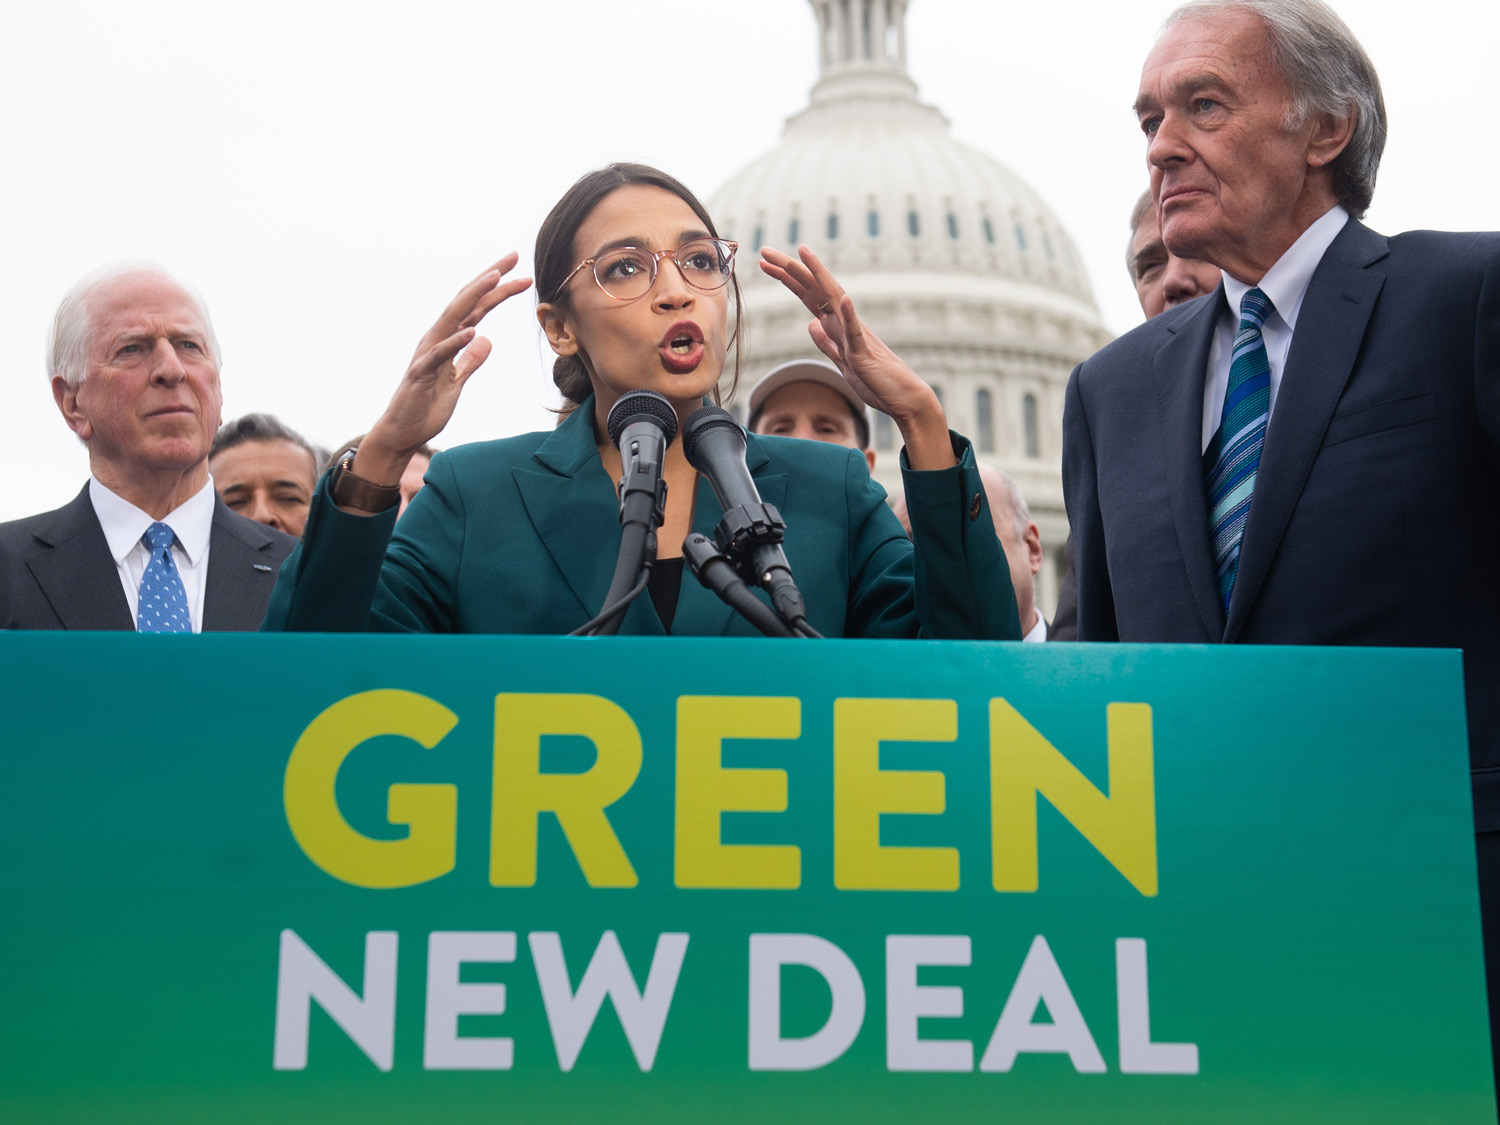 Alexandria Ocasio-Cortez announces Green New Deal legislation on Feb. 7.